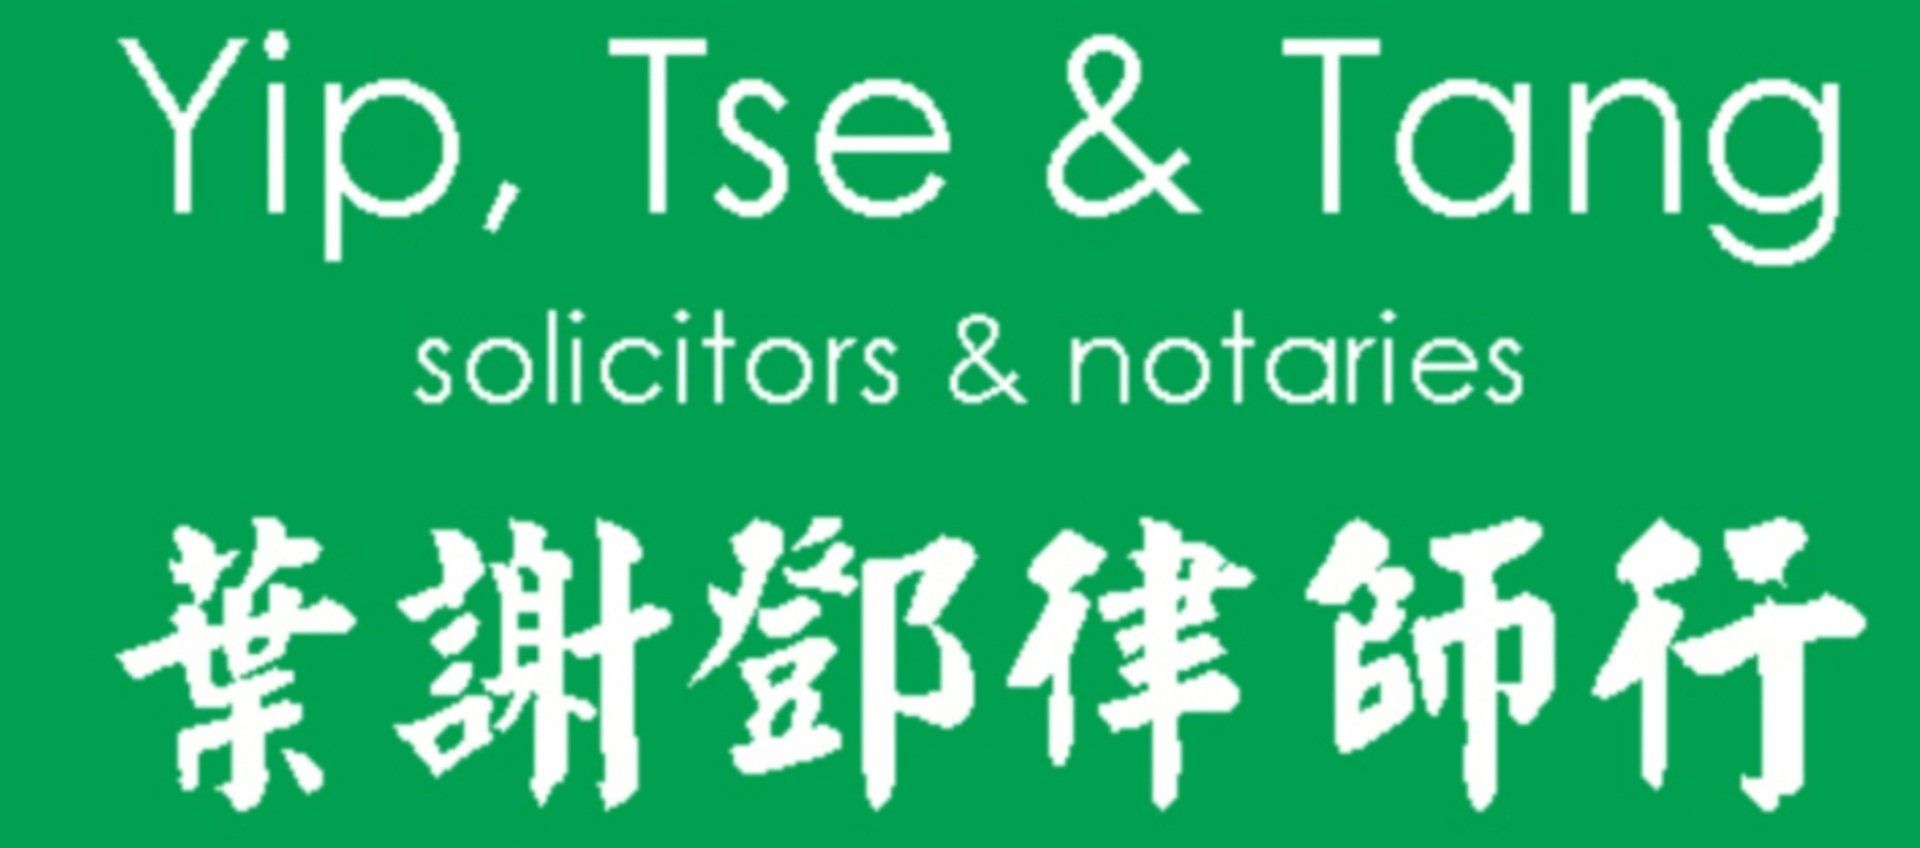 Yip Tse & Tang divorce lawyers in Hong Kong